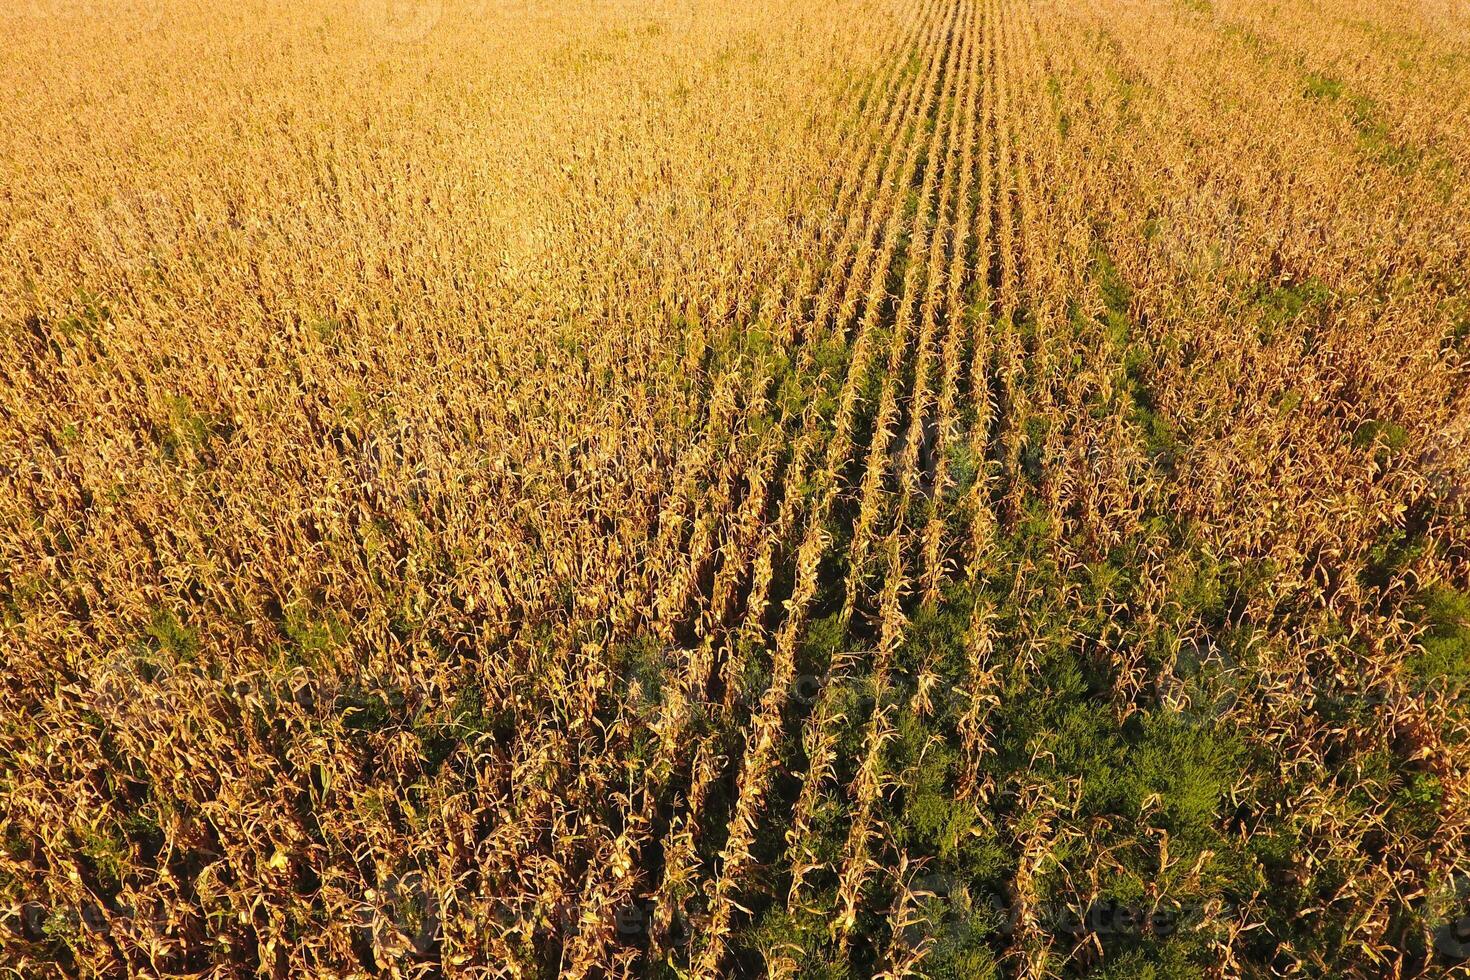 Field with ripe corn. Dry stalks of corn. View of the cornfield photo